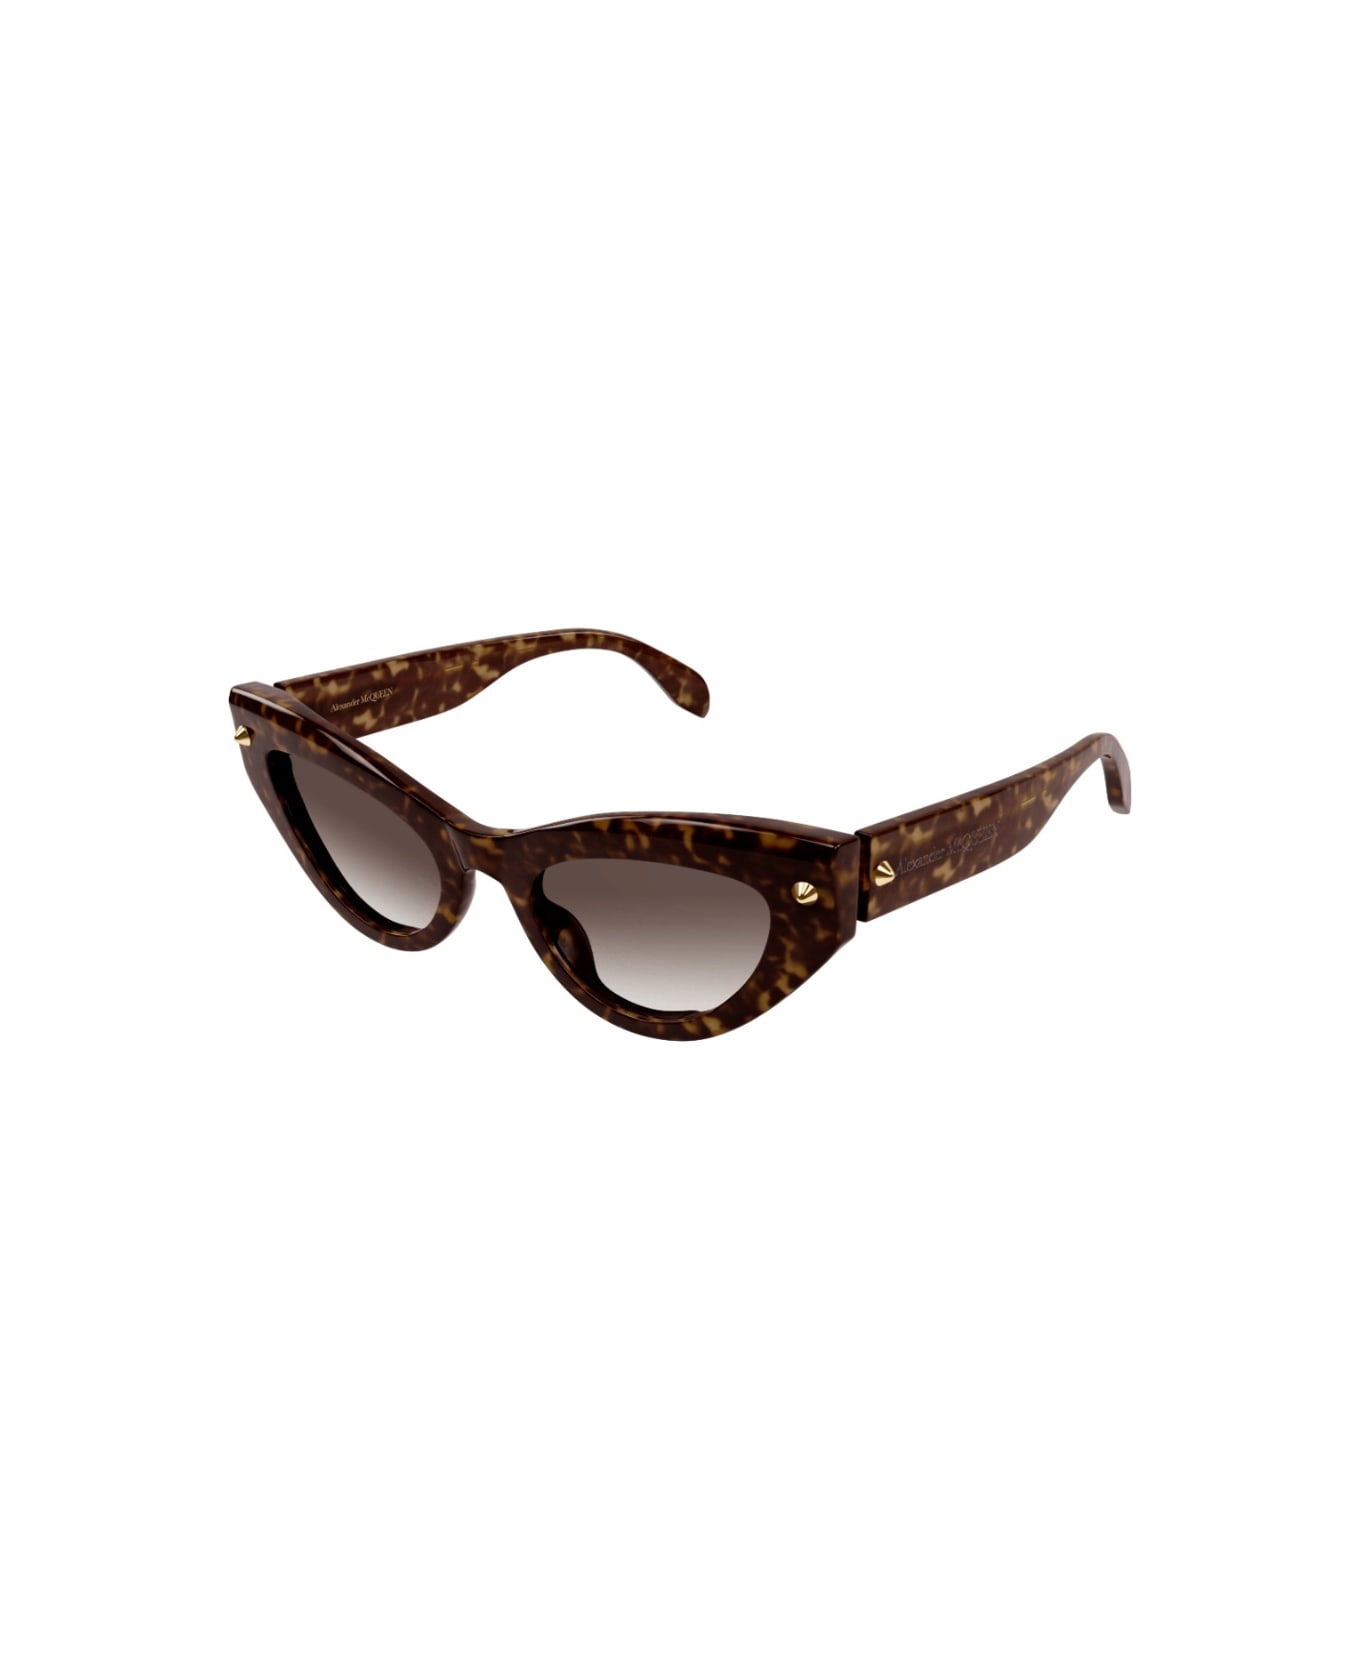 Alexander McQueen Eyewear AM0407S 002 Sunglasses - Tartarugato